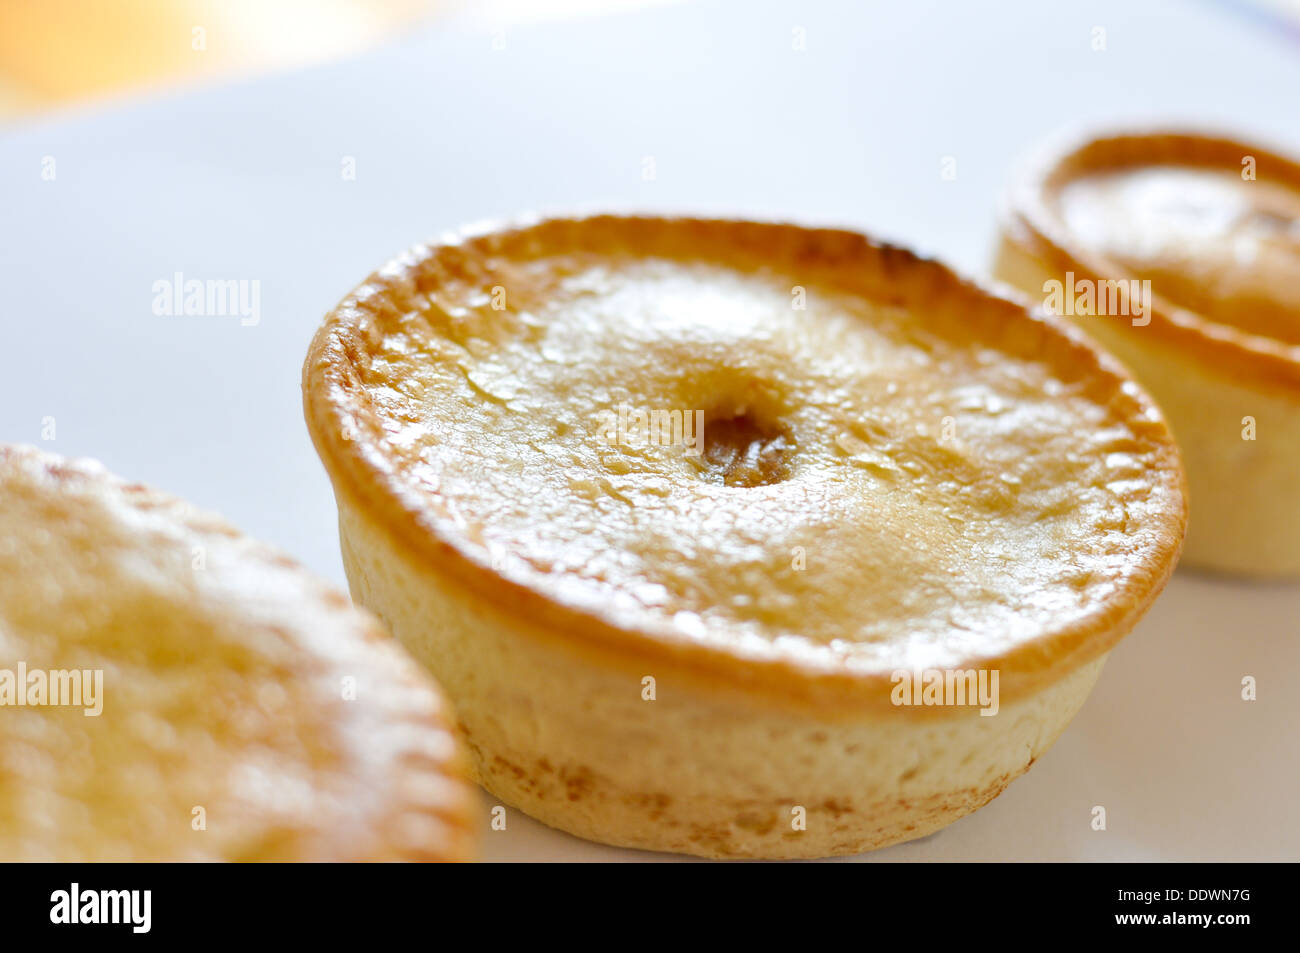 A pie. Stock Photo